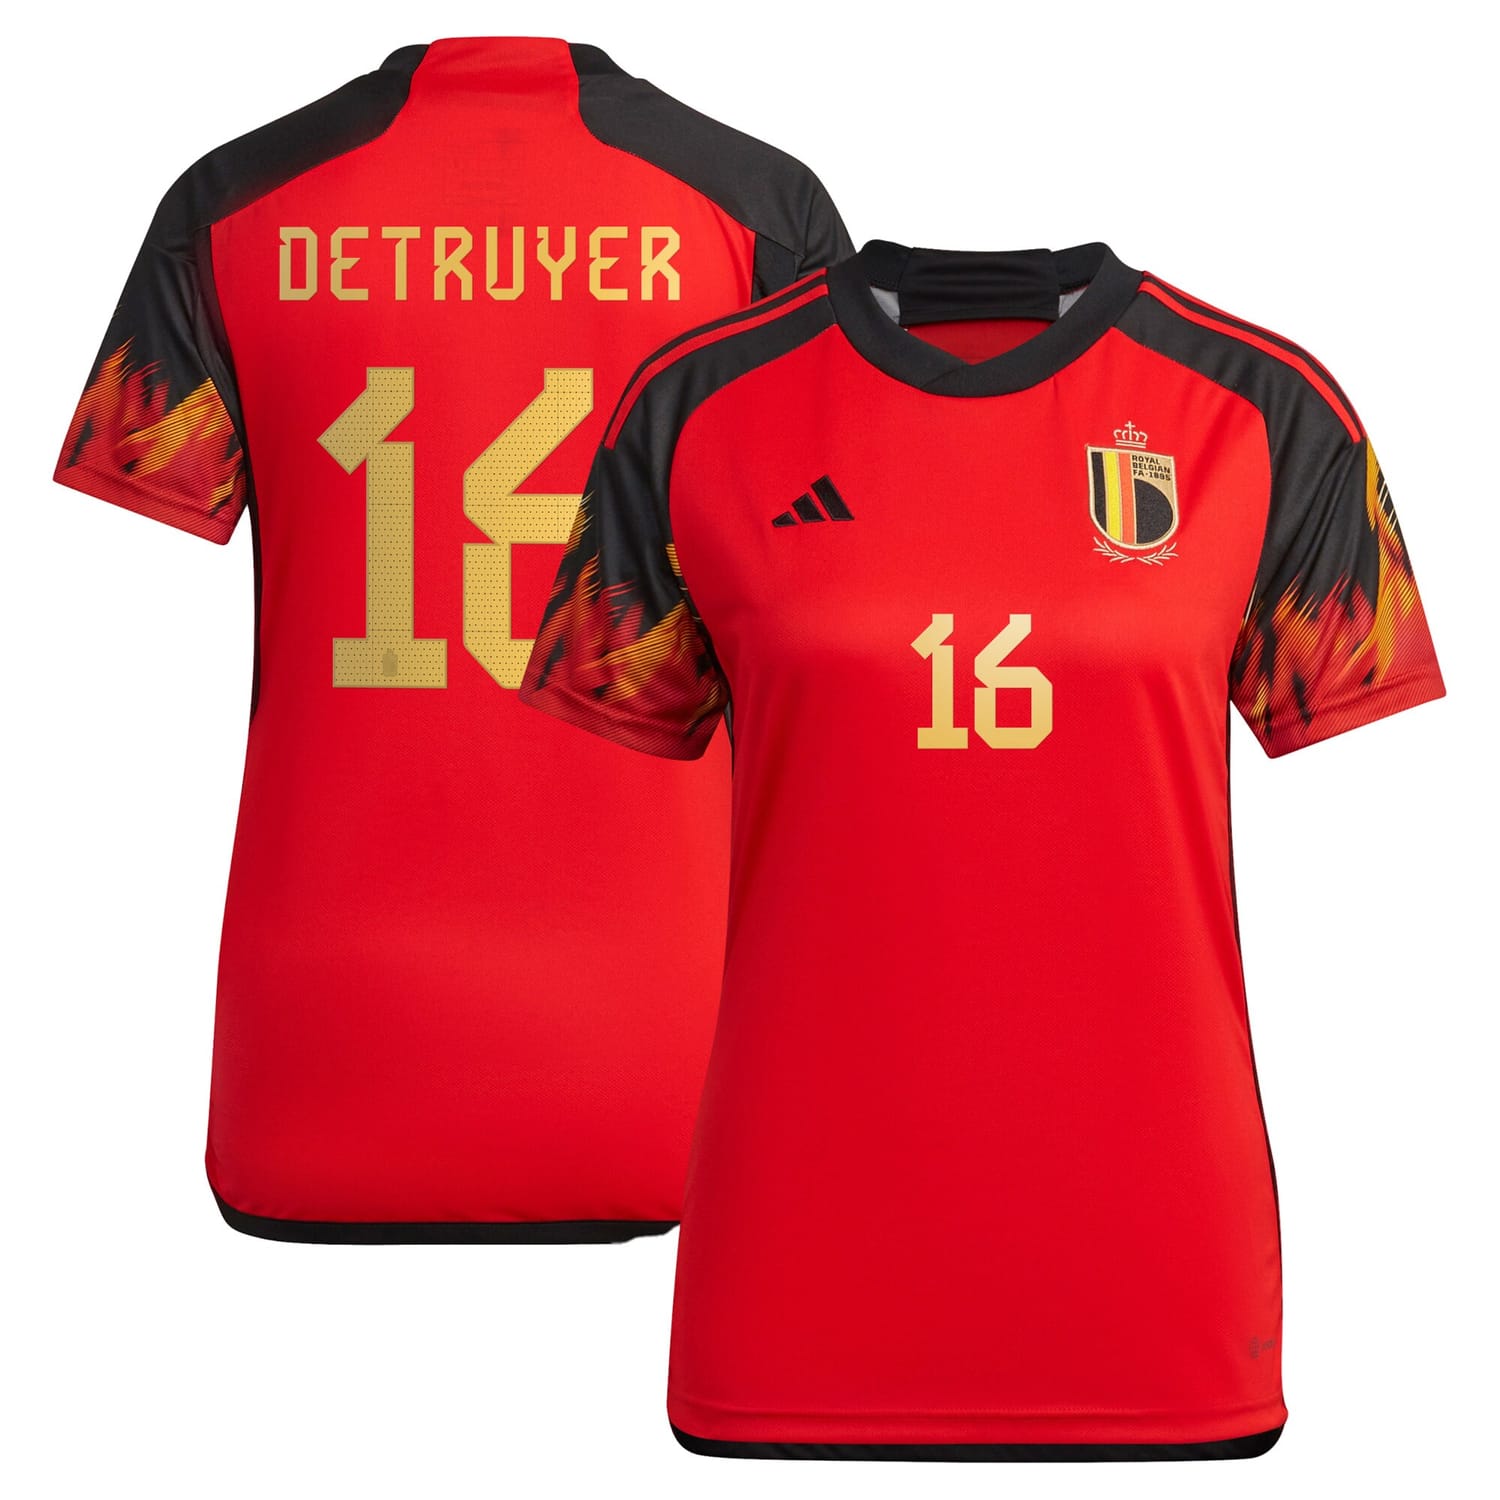 Belgium National Team Home Jersey Shirt 2022 player Marie Detruyer 16 printing for Women